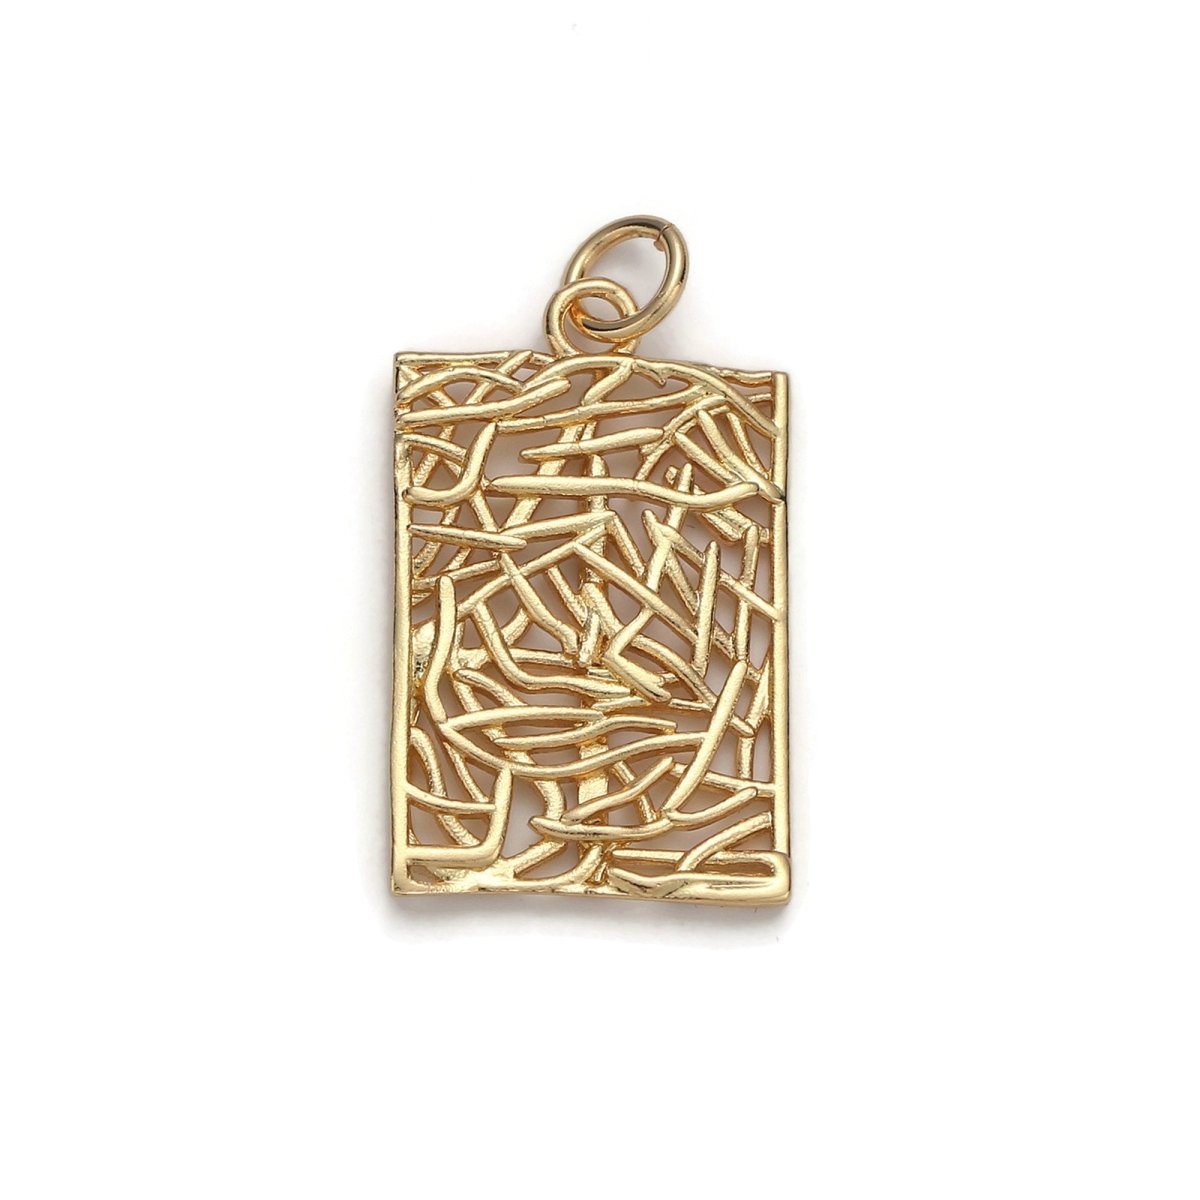 24k Gold Filled Patterned Rectangle Charm, Branch Paisley Pendant Charm, Gold Filled Charm, For DIY Jewelry, Gold Color D-055 - DLUXCA